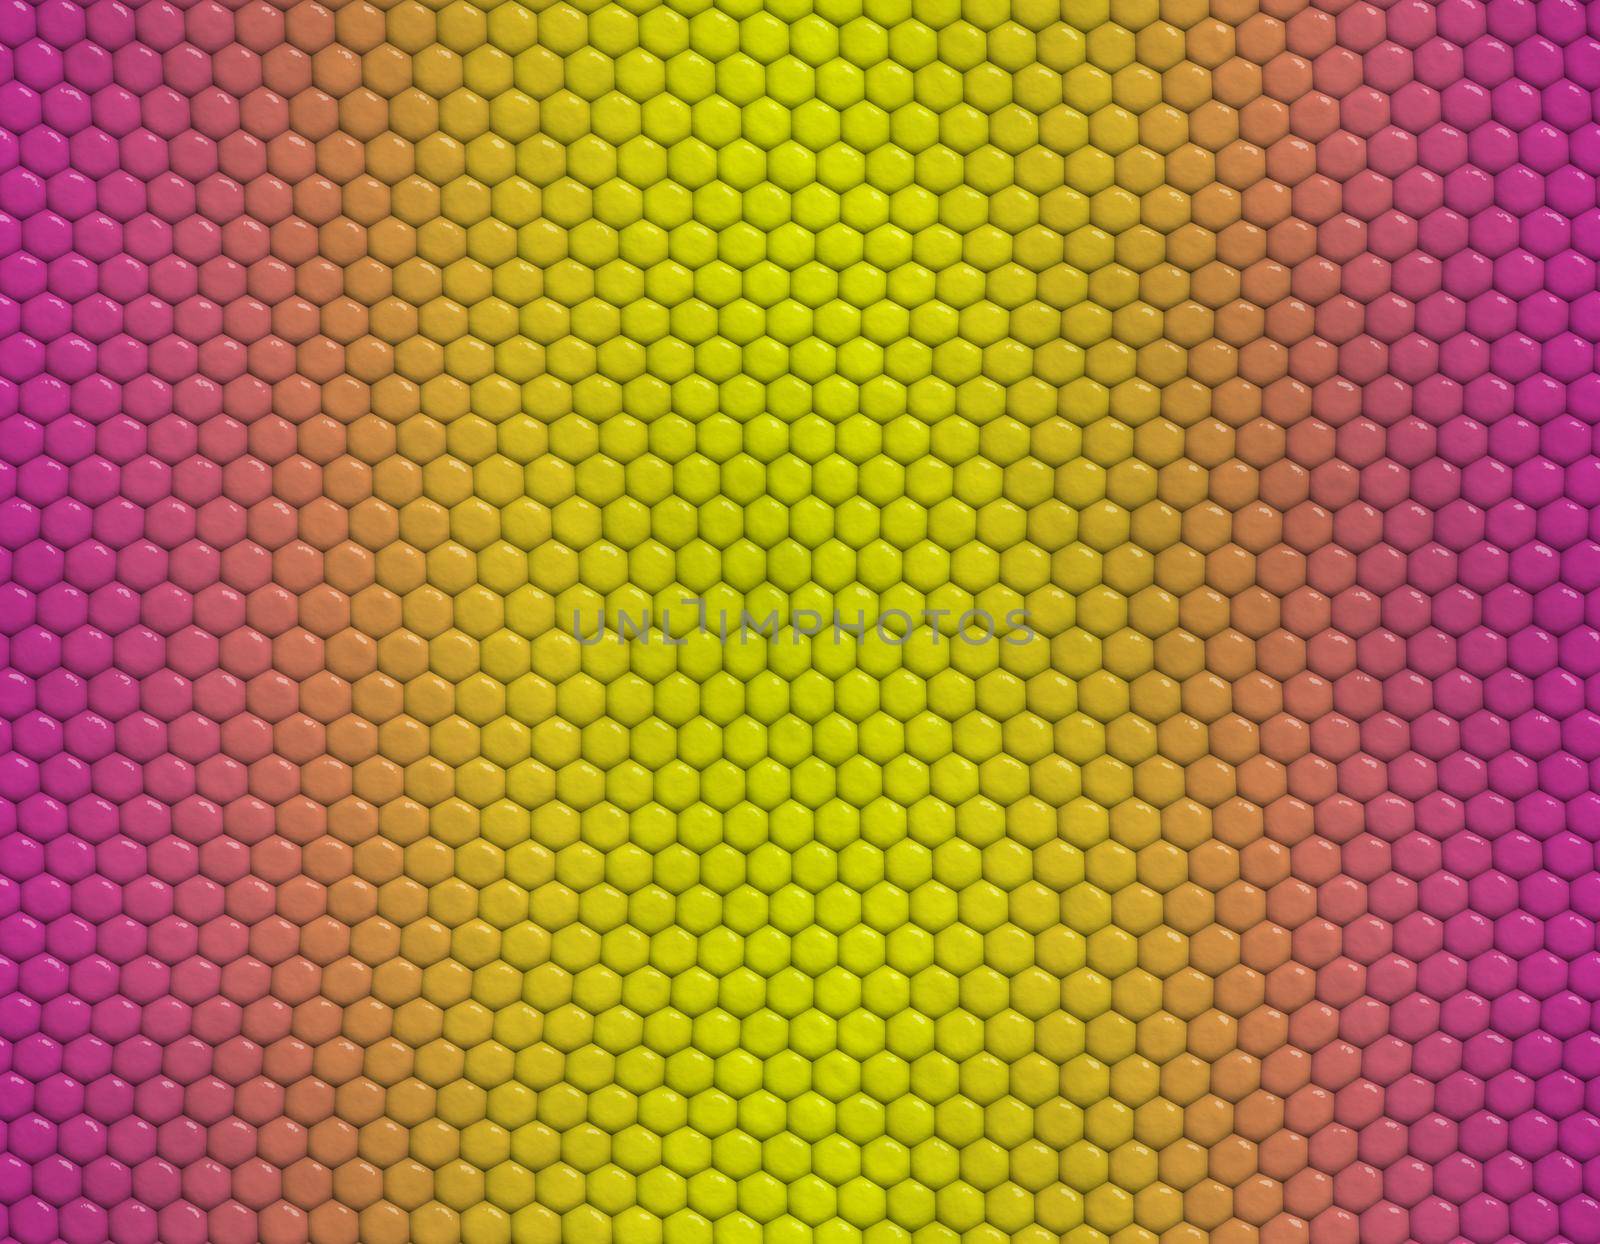 Magenta and yellow gradient snake skin seamless pattern, hexagonal scale